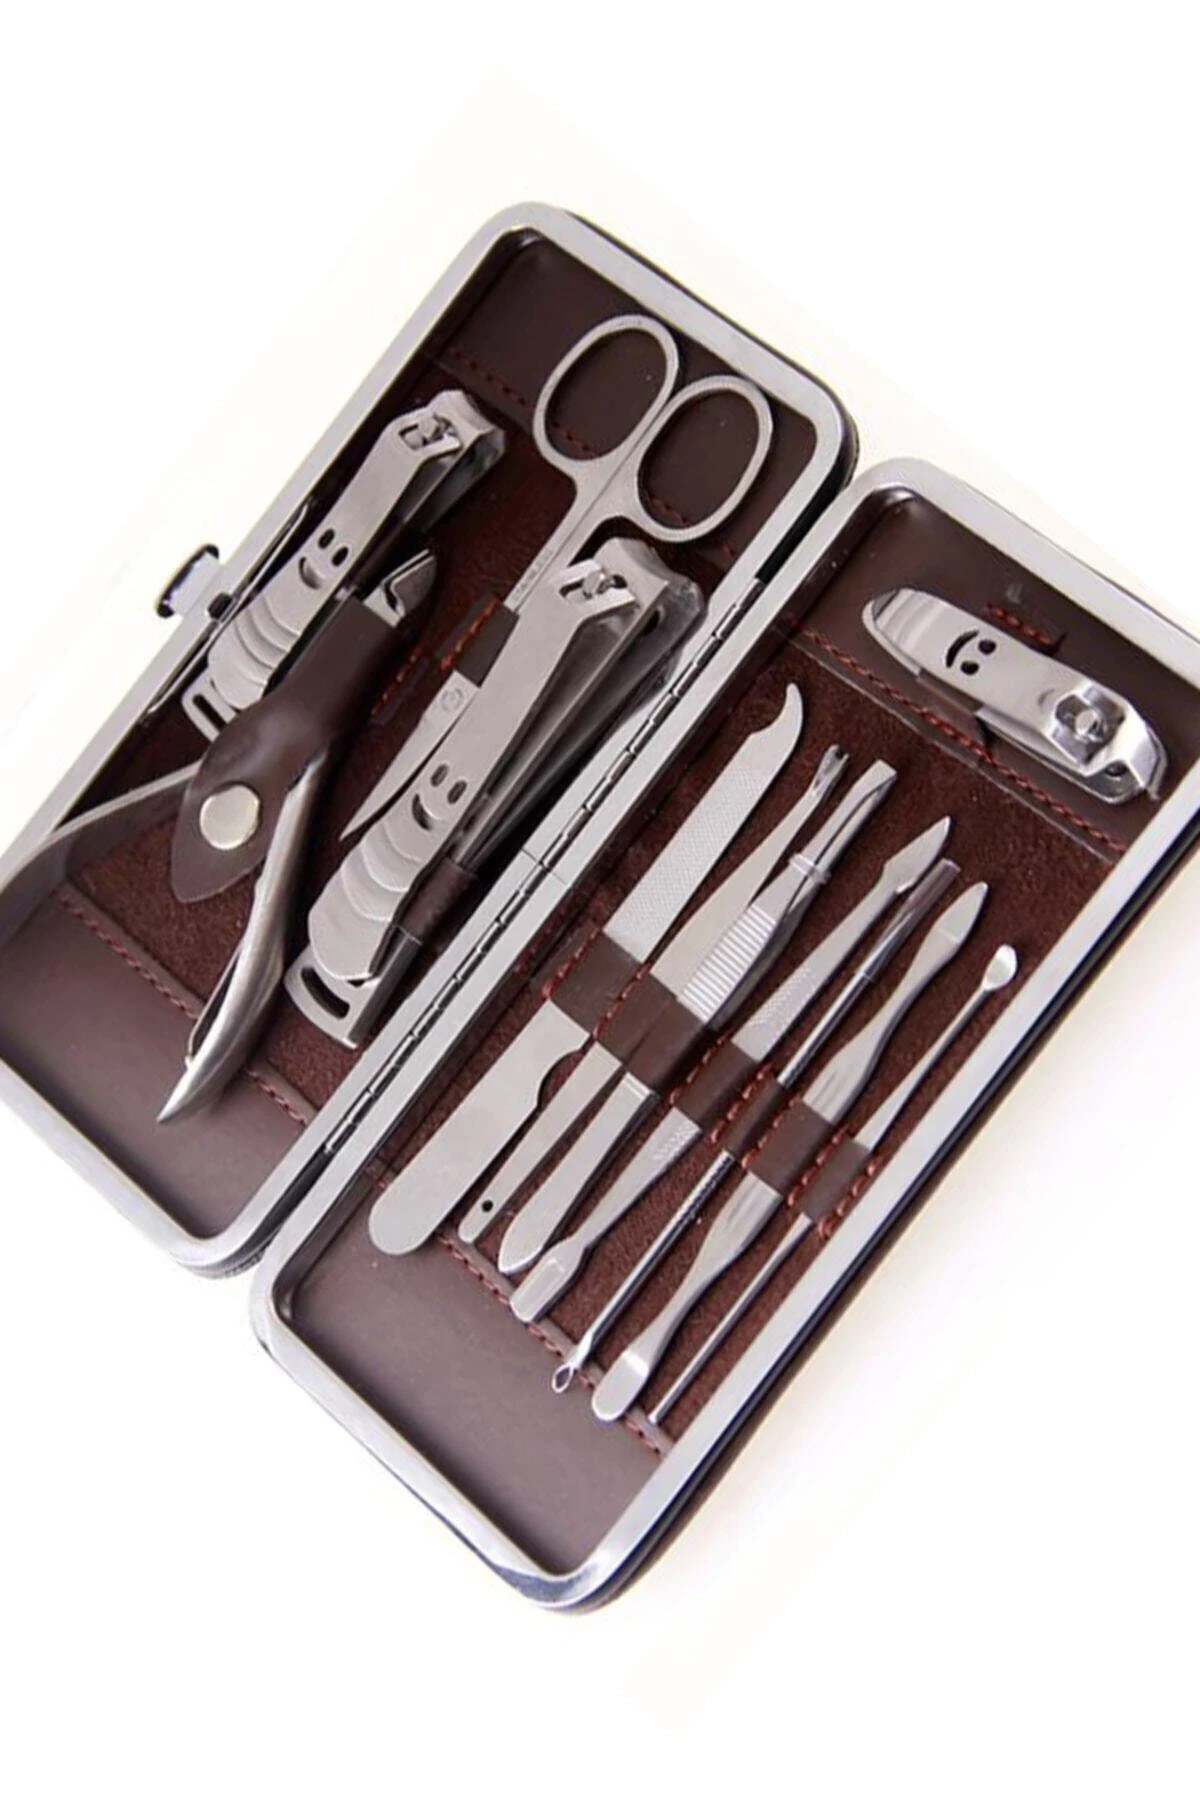 Ruba Manicure Set 12 Pieces Steel Nail Care Set with Bag|Sets & Kits| - AliExpress